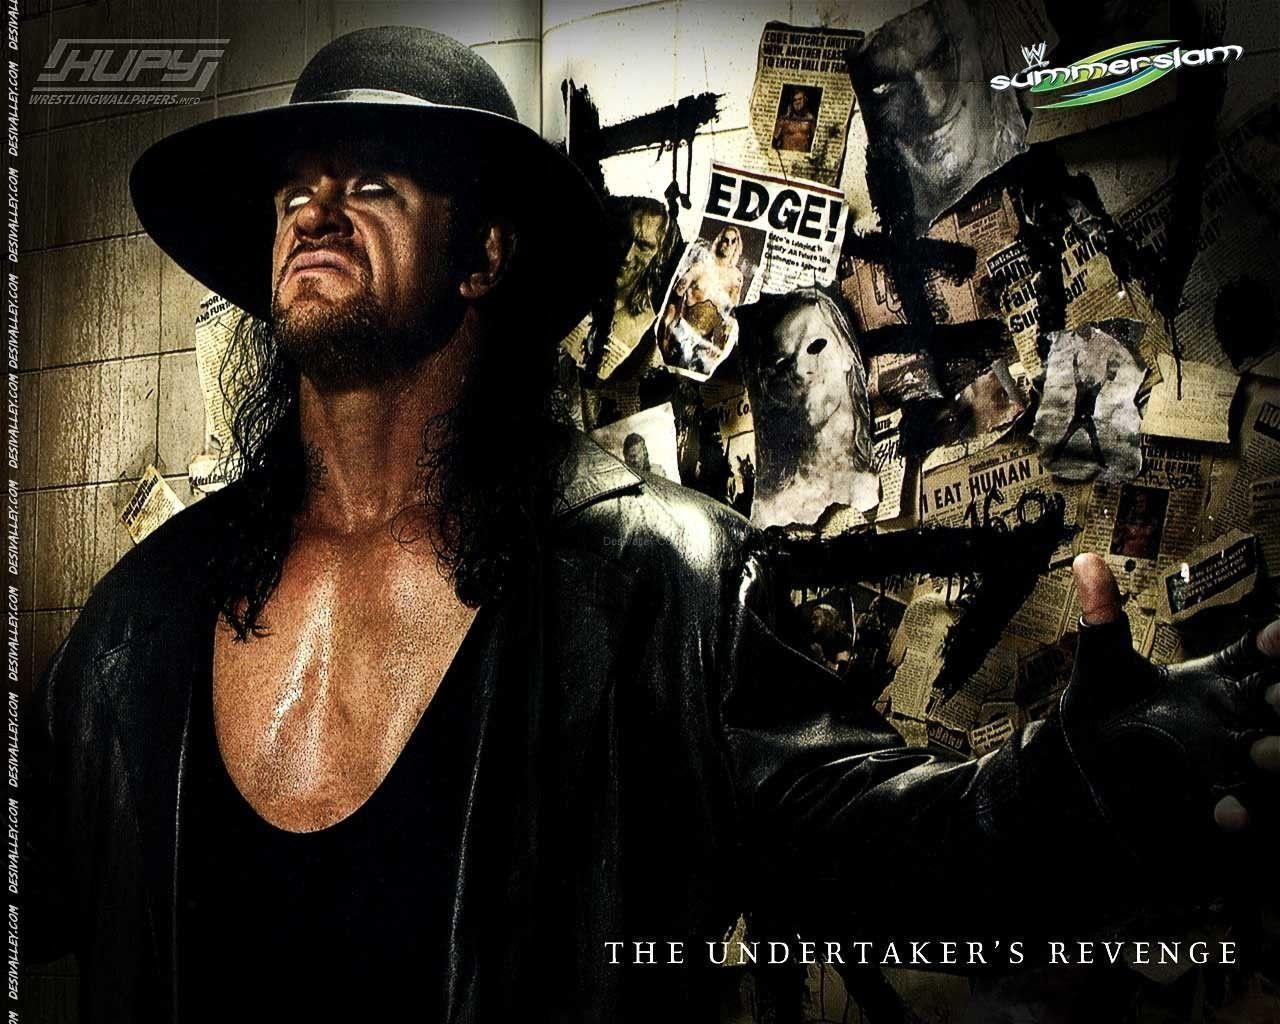 Ryback WWE Superstar 2013 HD Wallpaper for Desktop